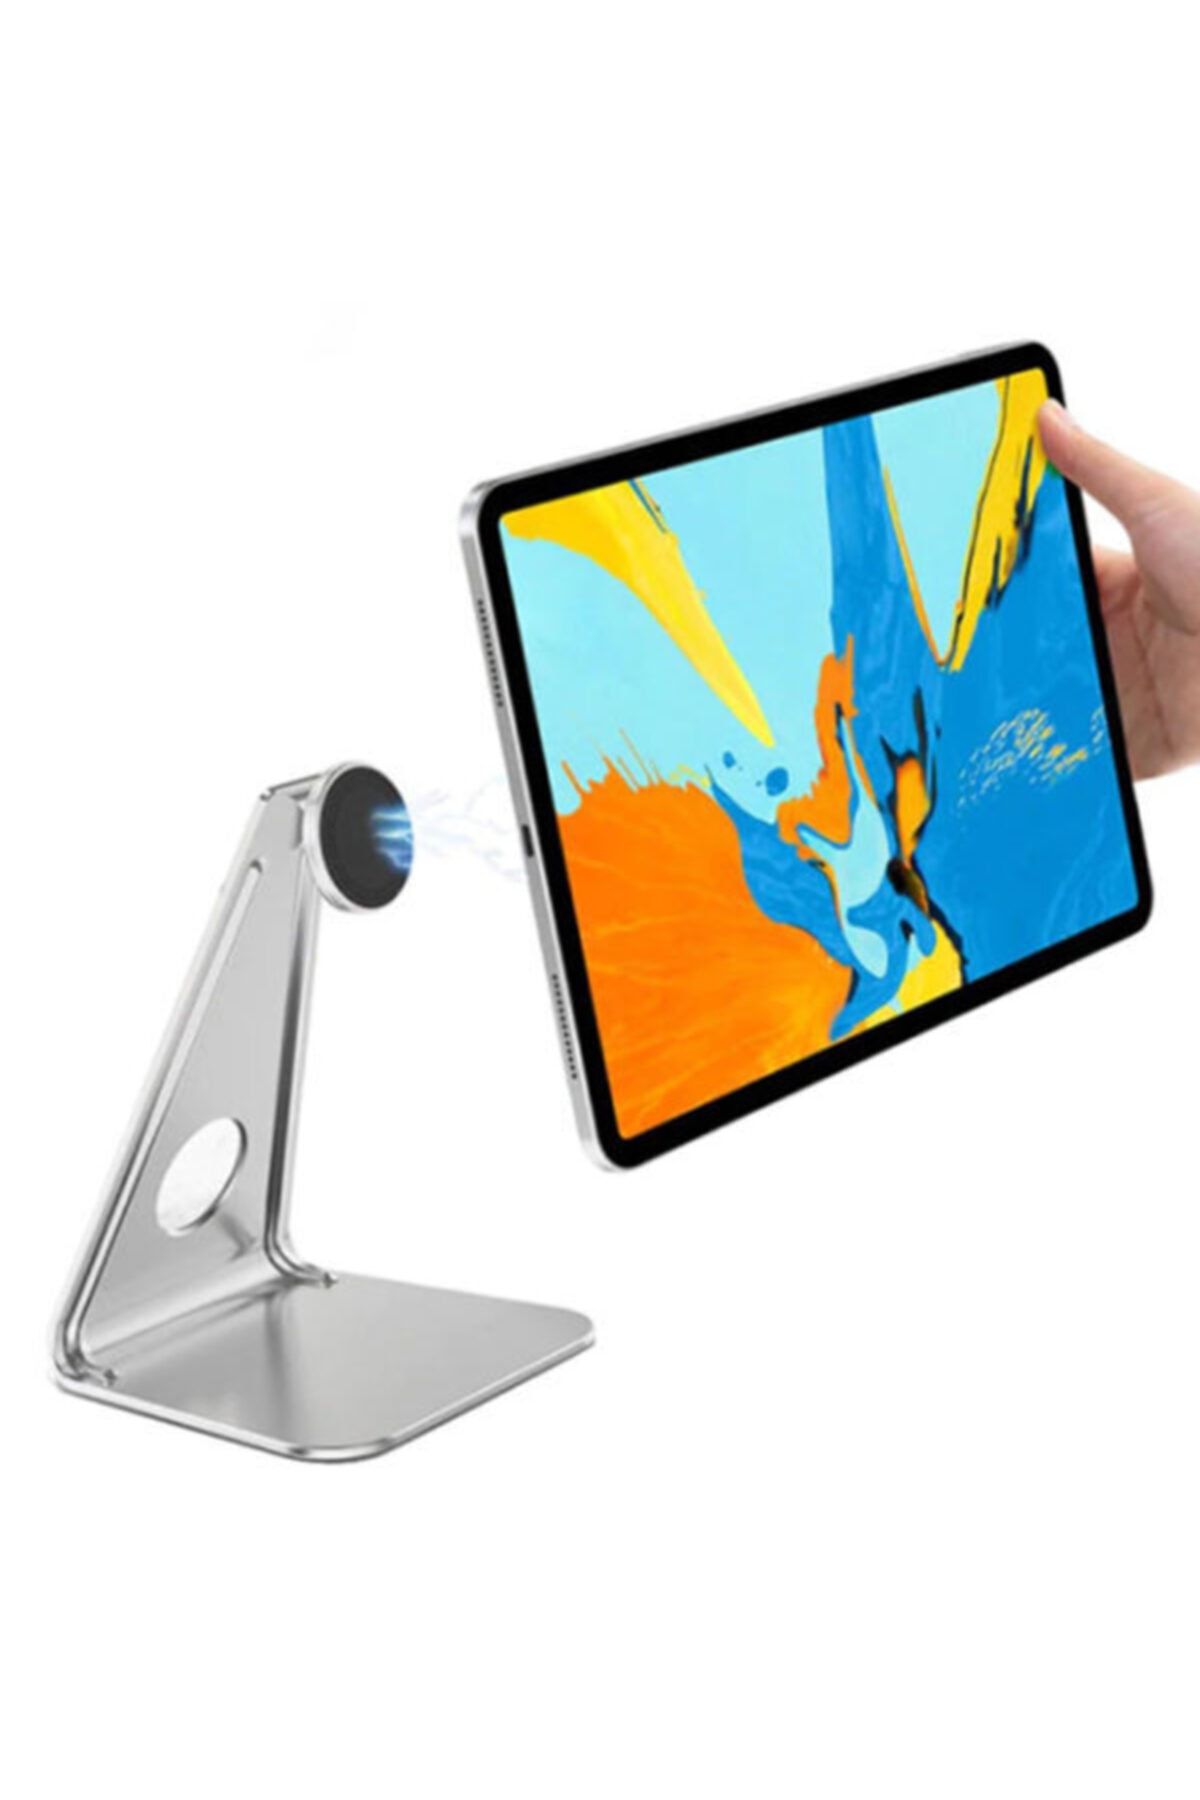 TeknoExpress Masaüstü Için Ayarlanabilir Metal Iphone Ipad Xiaomi Samsung Huawei Tablet Telefon Tutucu Stand